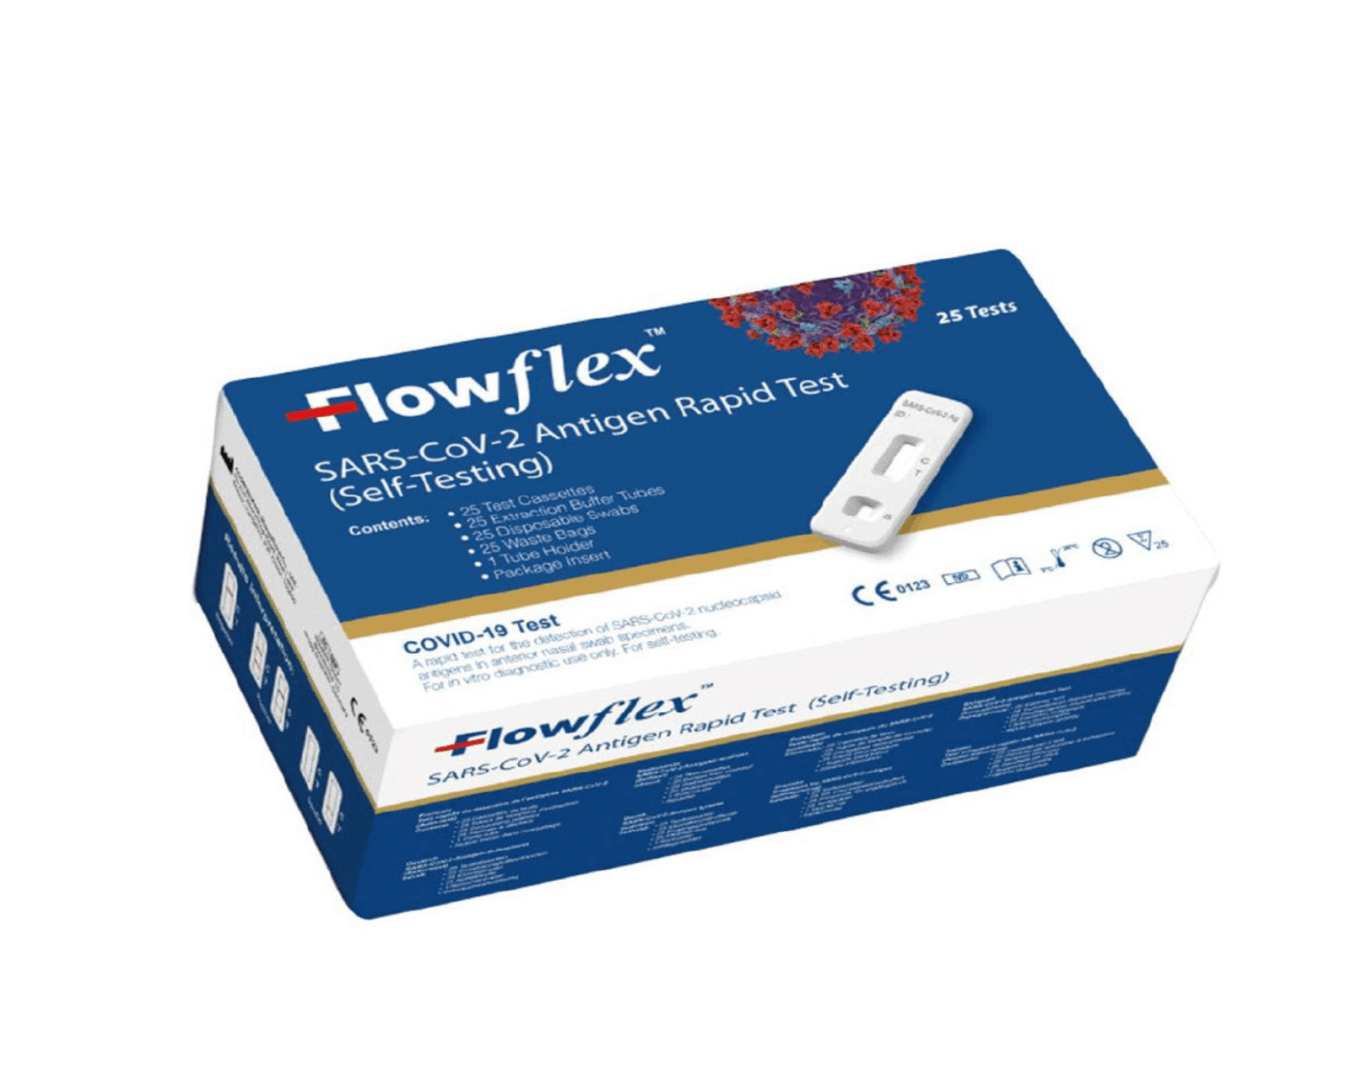 Flowflex COVID-19 Test